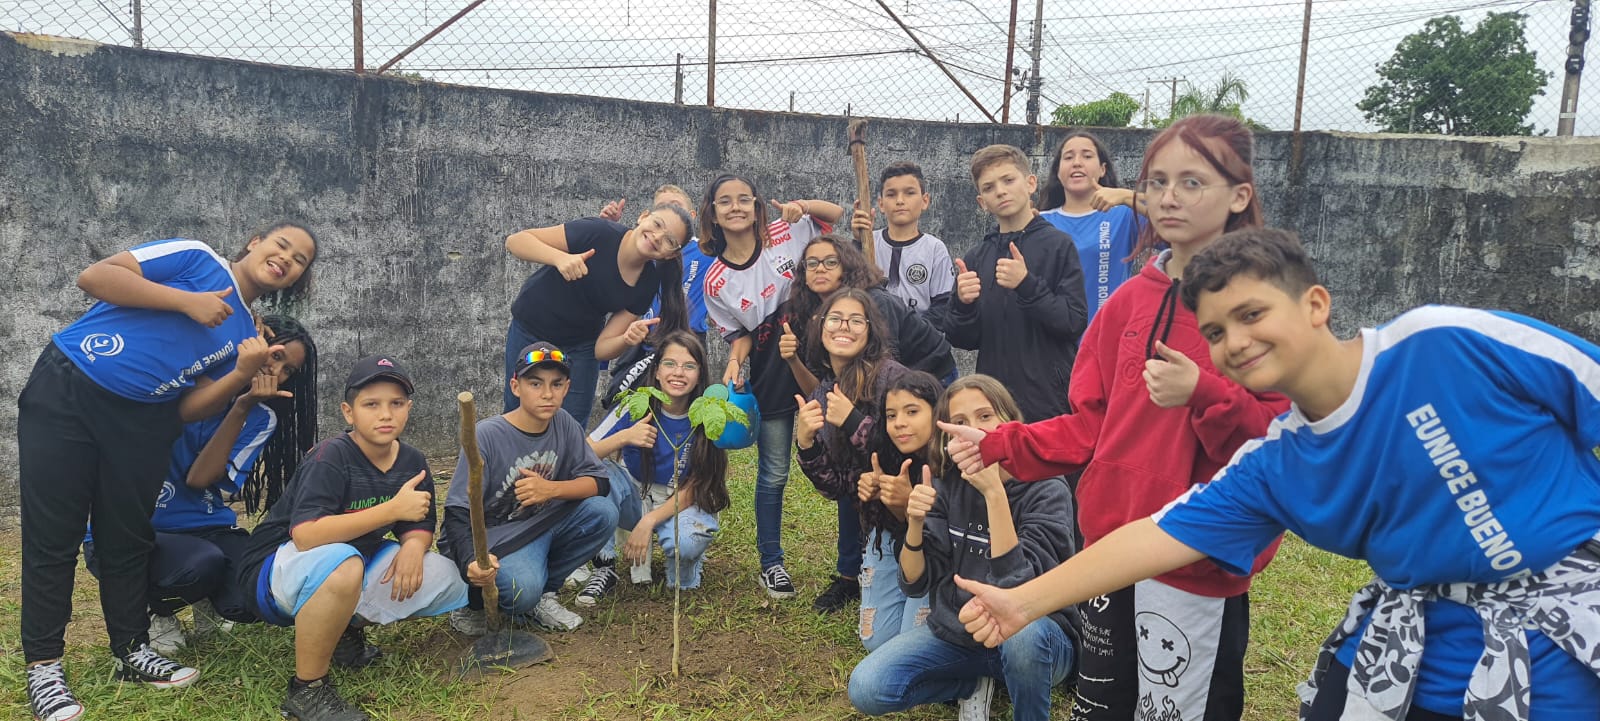 22/01 - Pinda promove projeto socioambiental com alunos da EE Eunice Bueno Romeiro